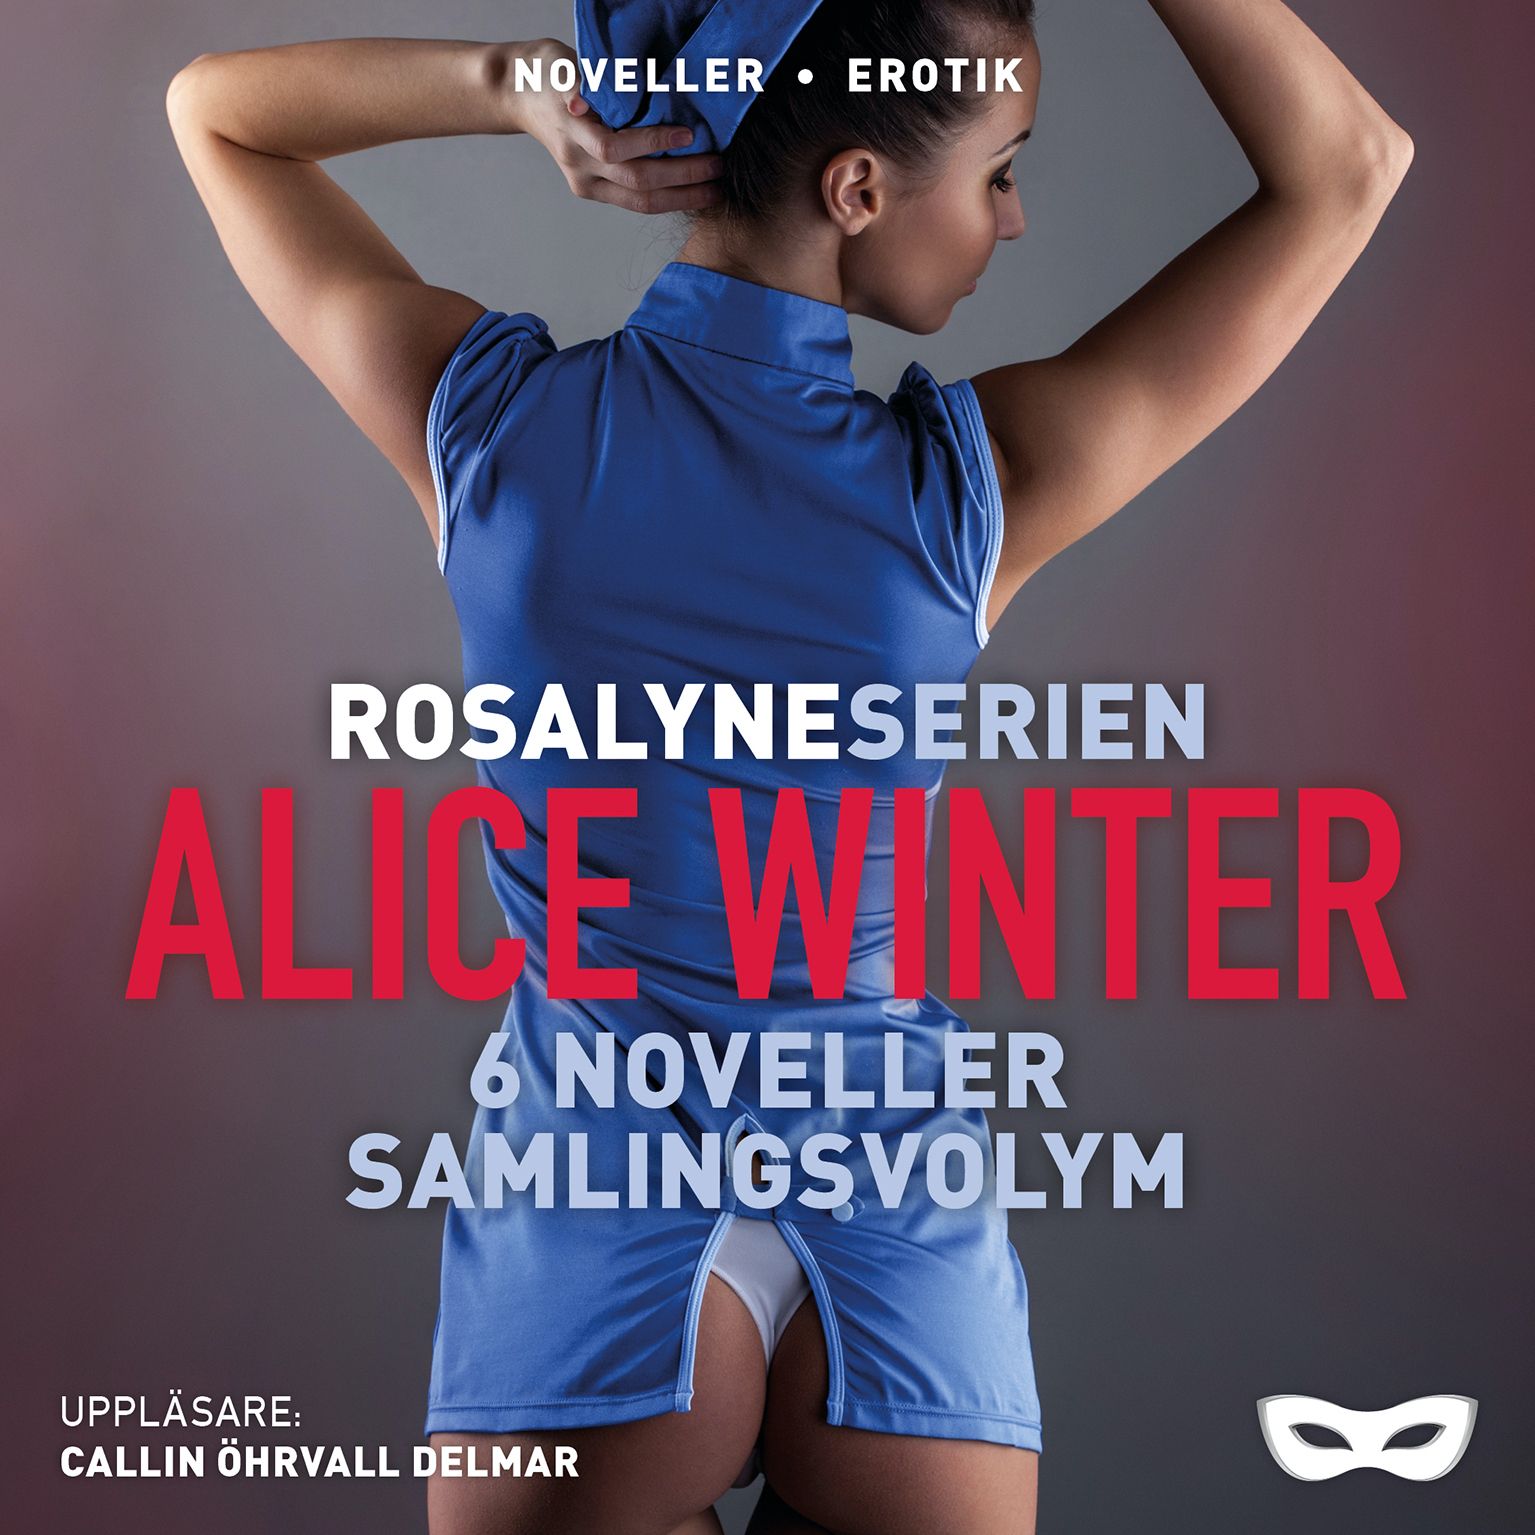 Rosalyneserien, audiobook by Alice Winter